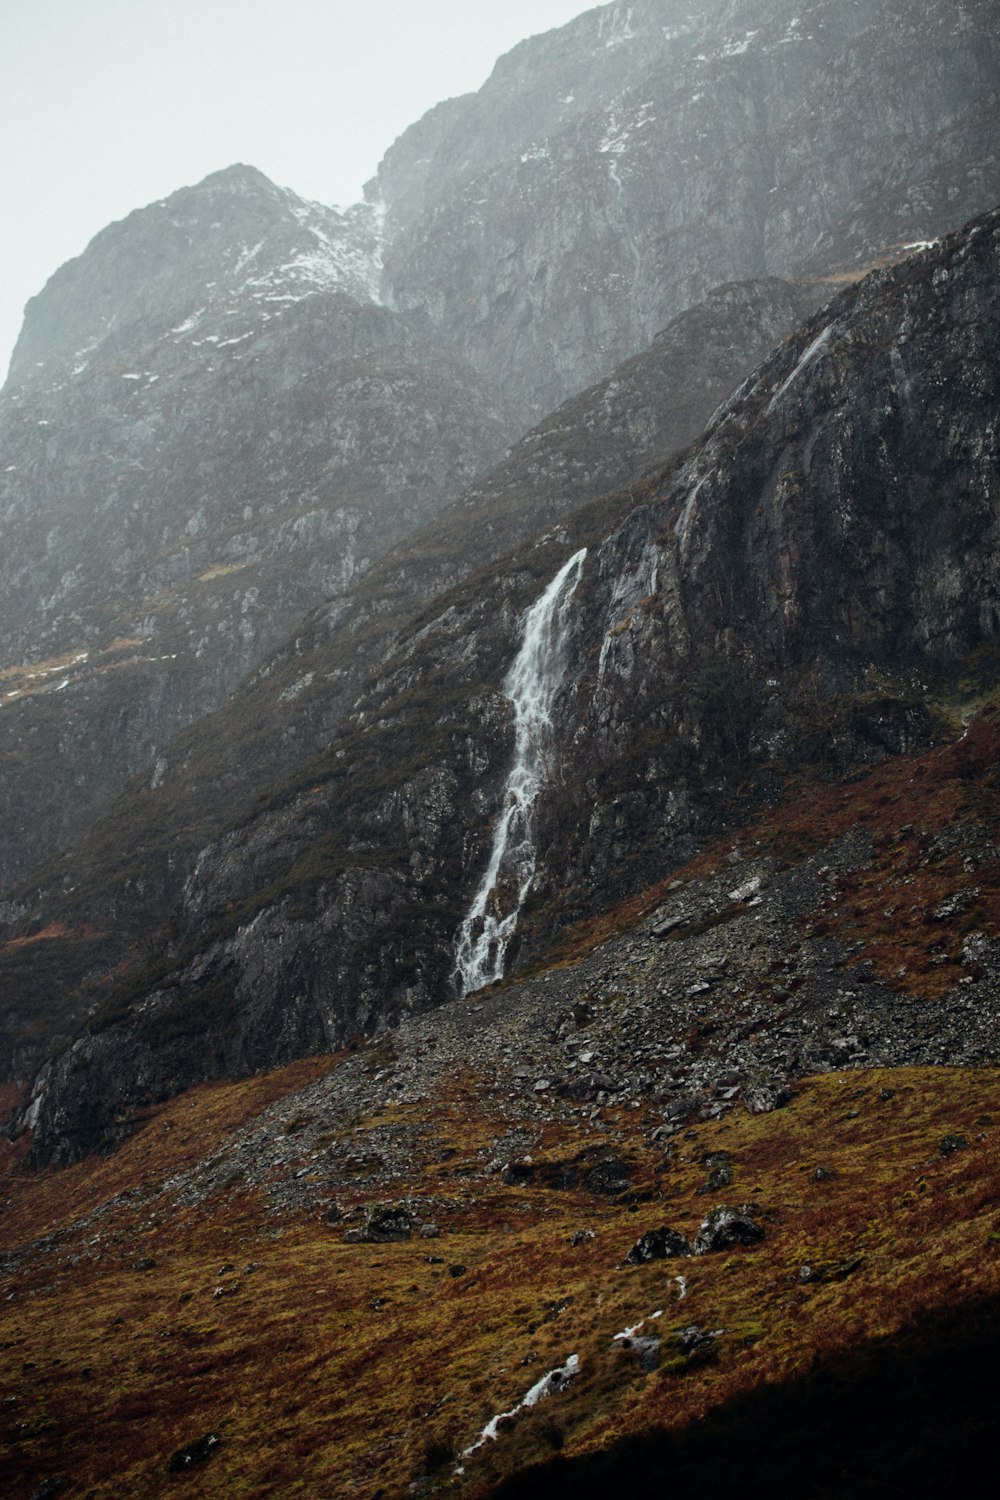 waterfalls on rocky mountain during daytime